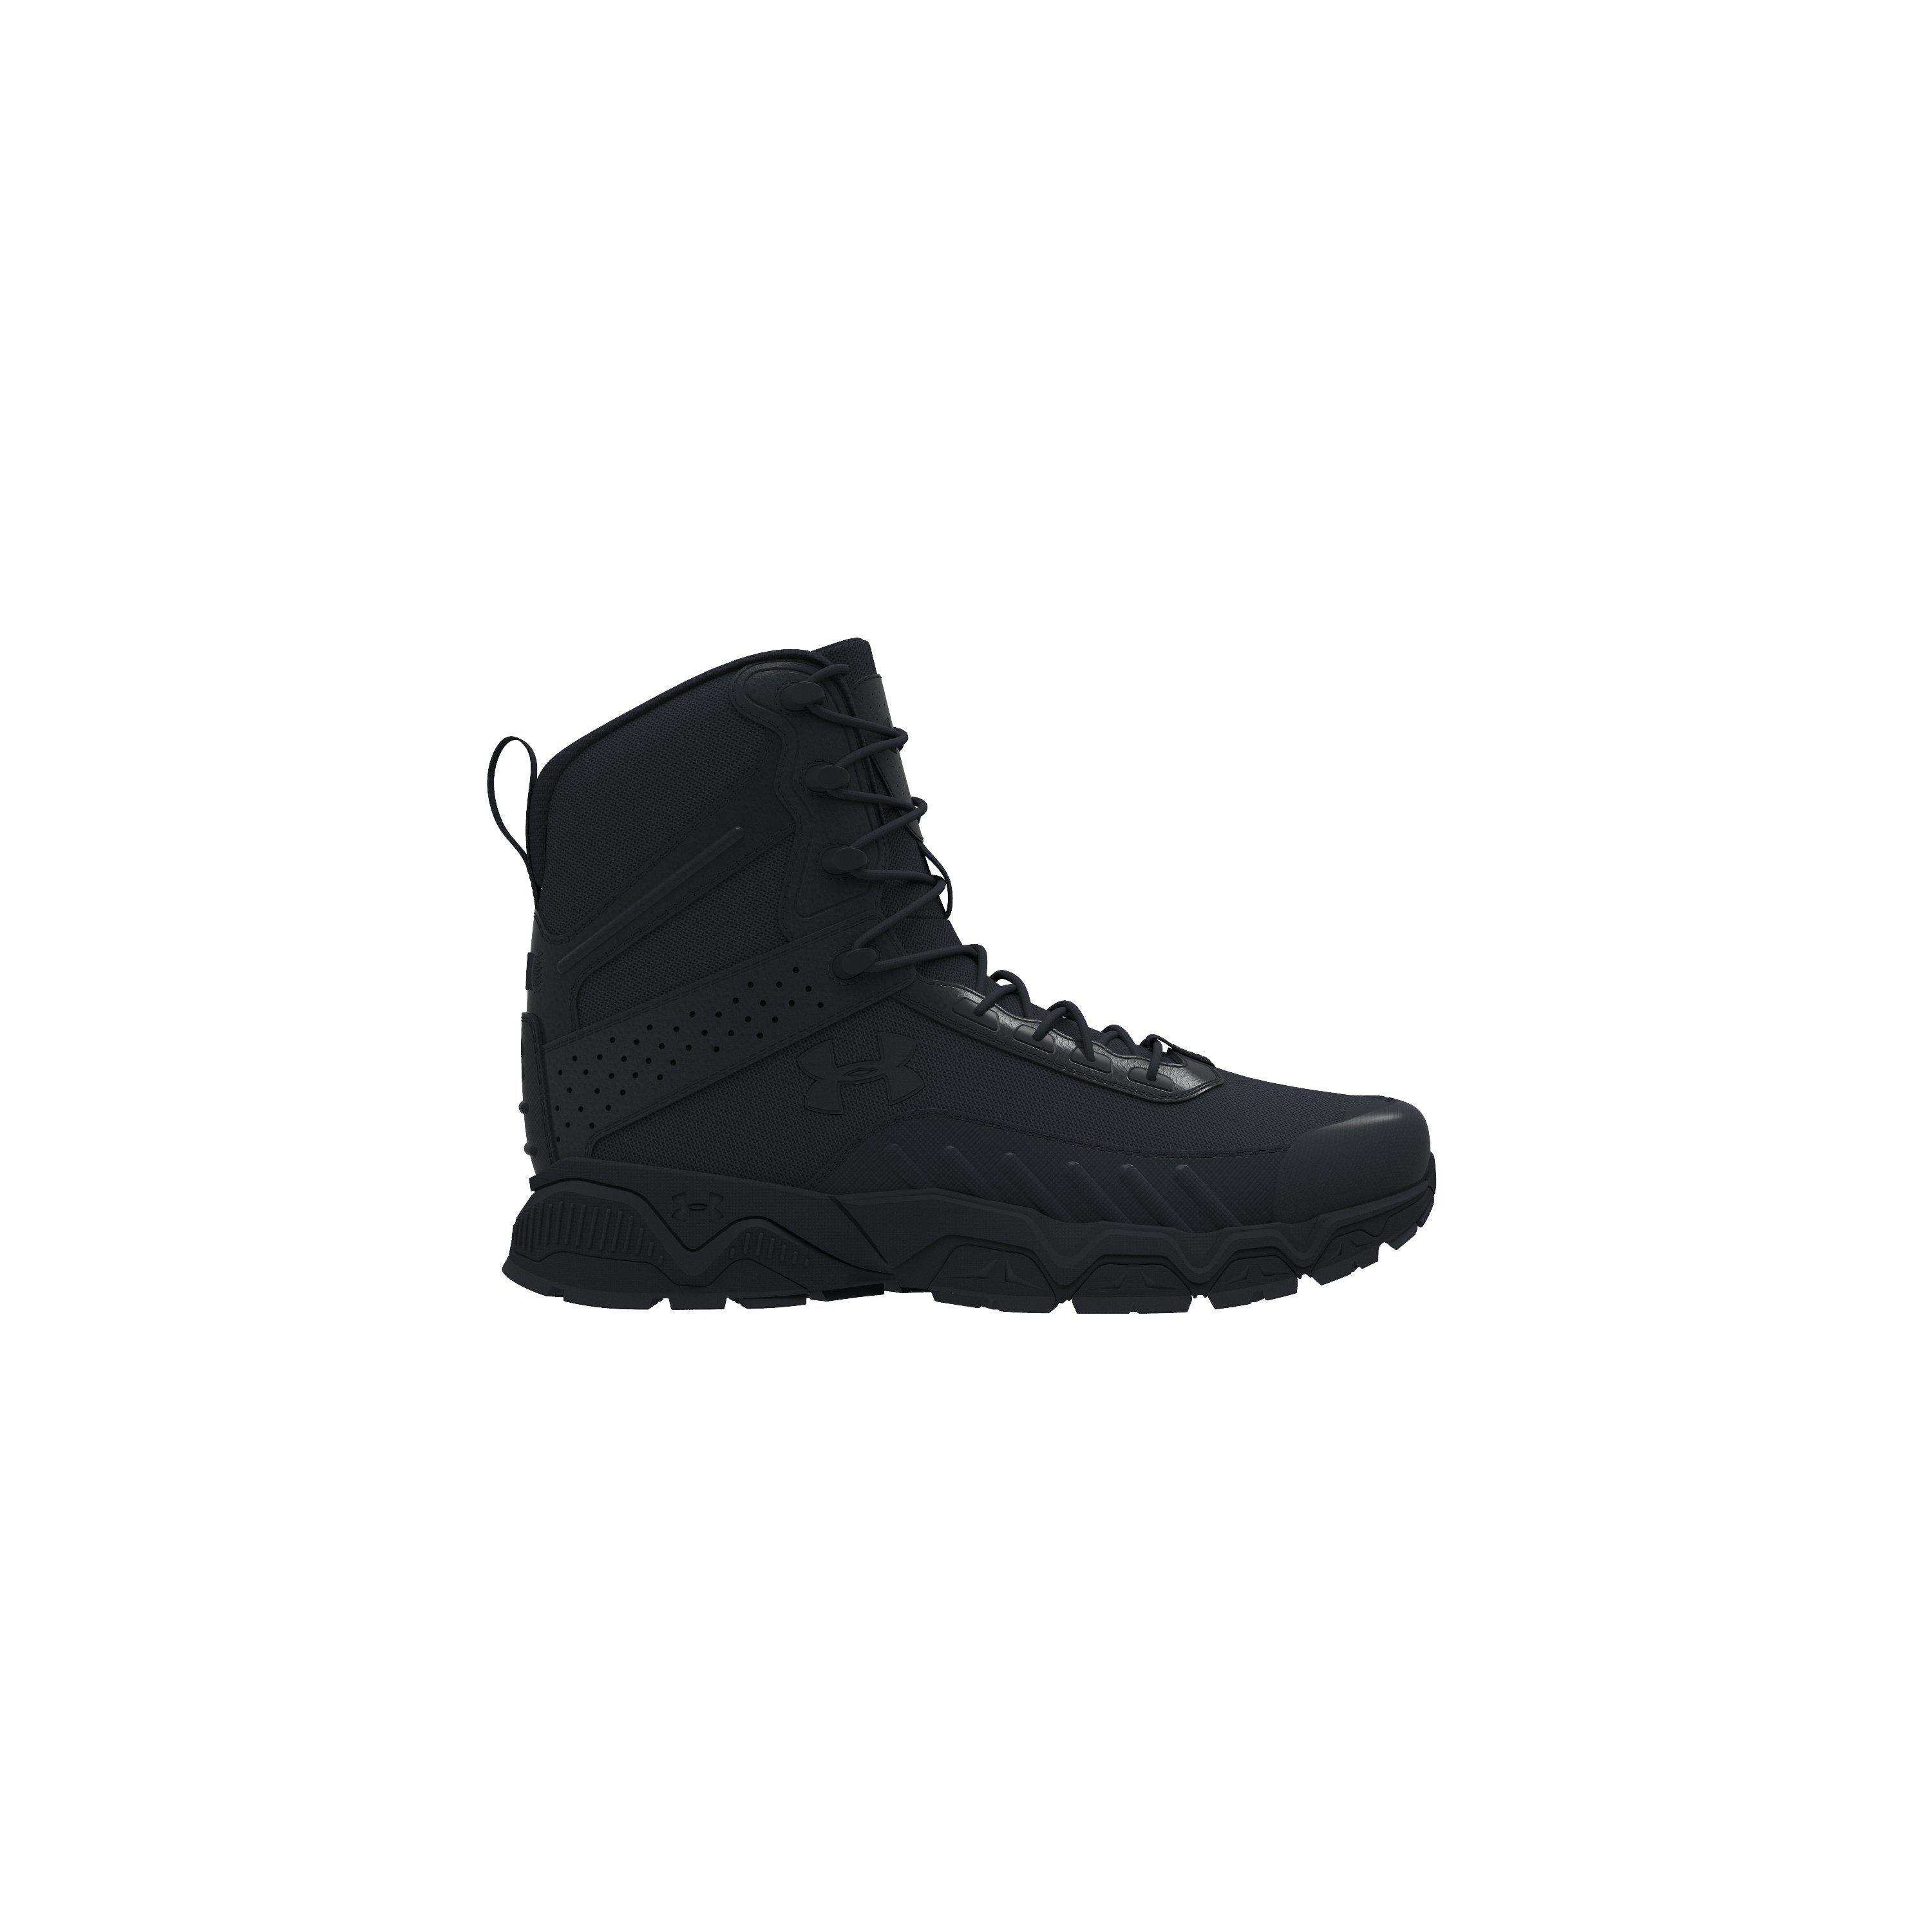 Under Armour Synthetic Men's Ua Valsetz 2.0 Wide Tactical Boots in Black  /Black (Black) for Men - Lyst